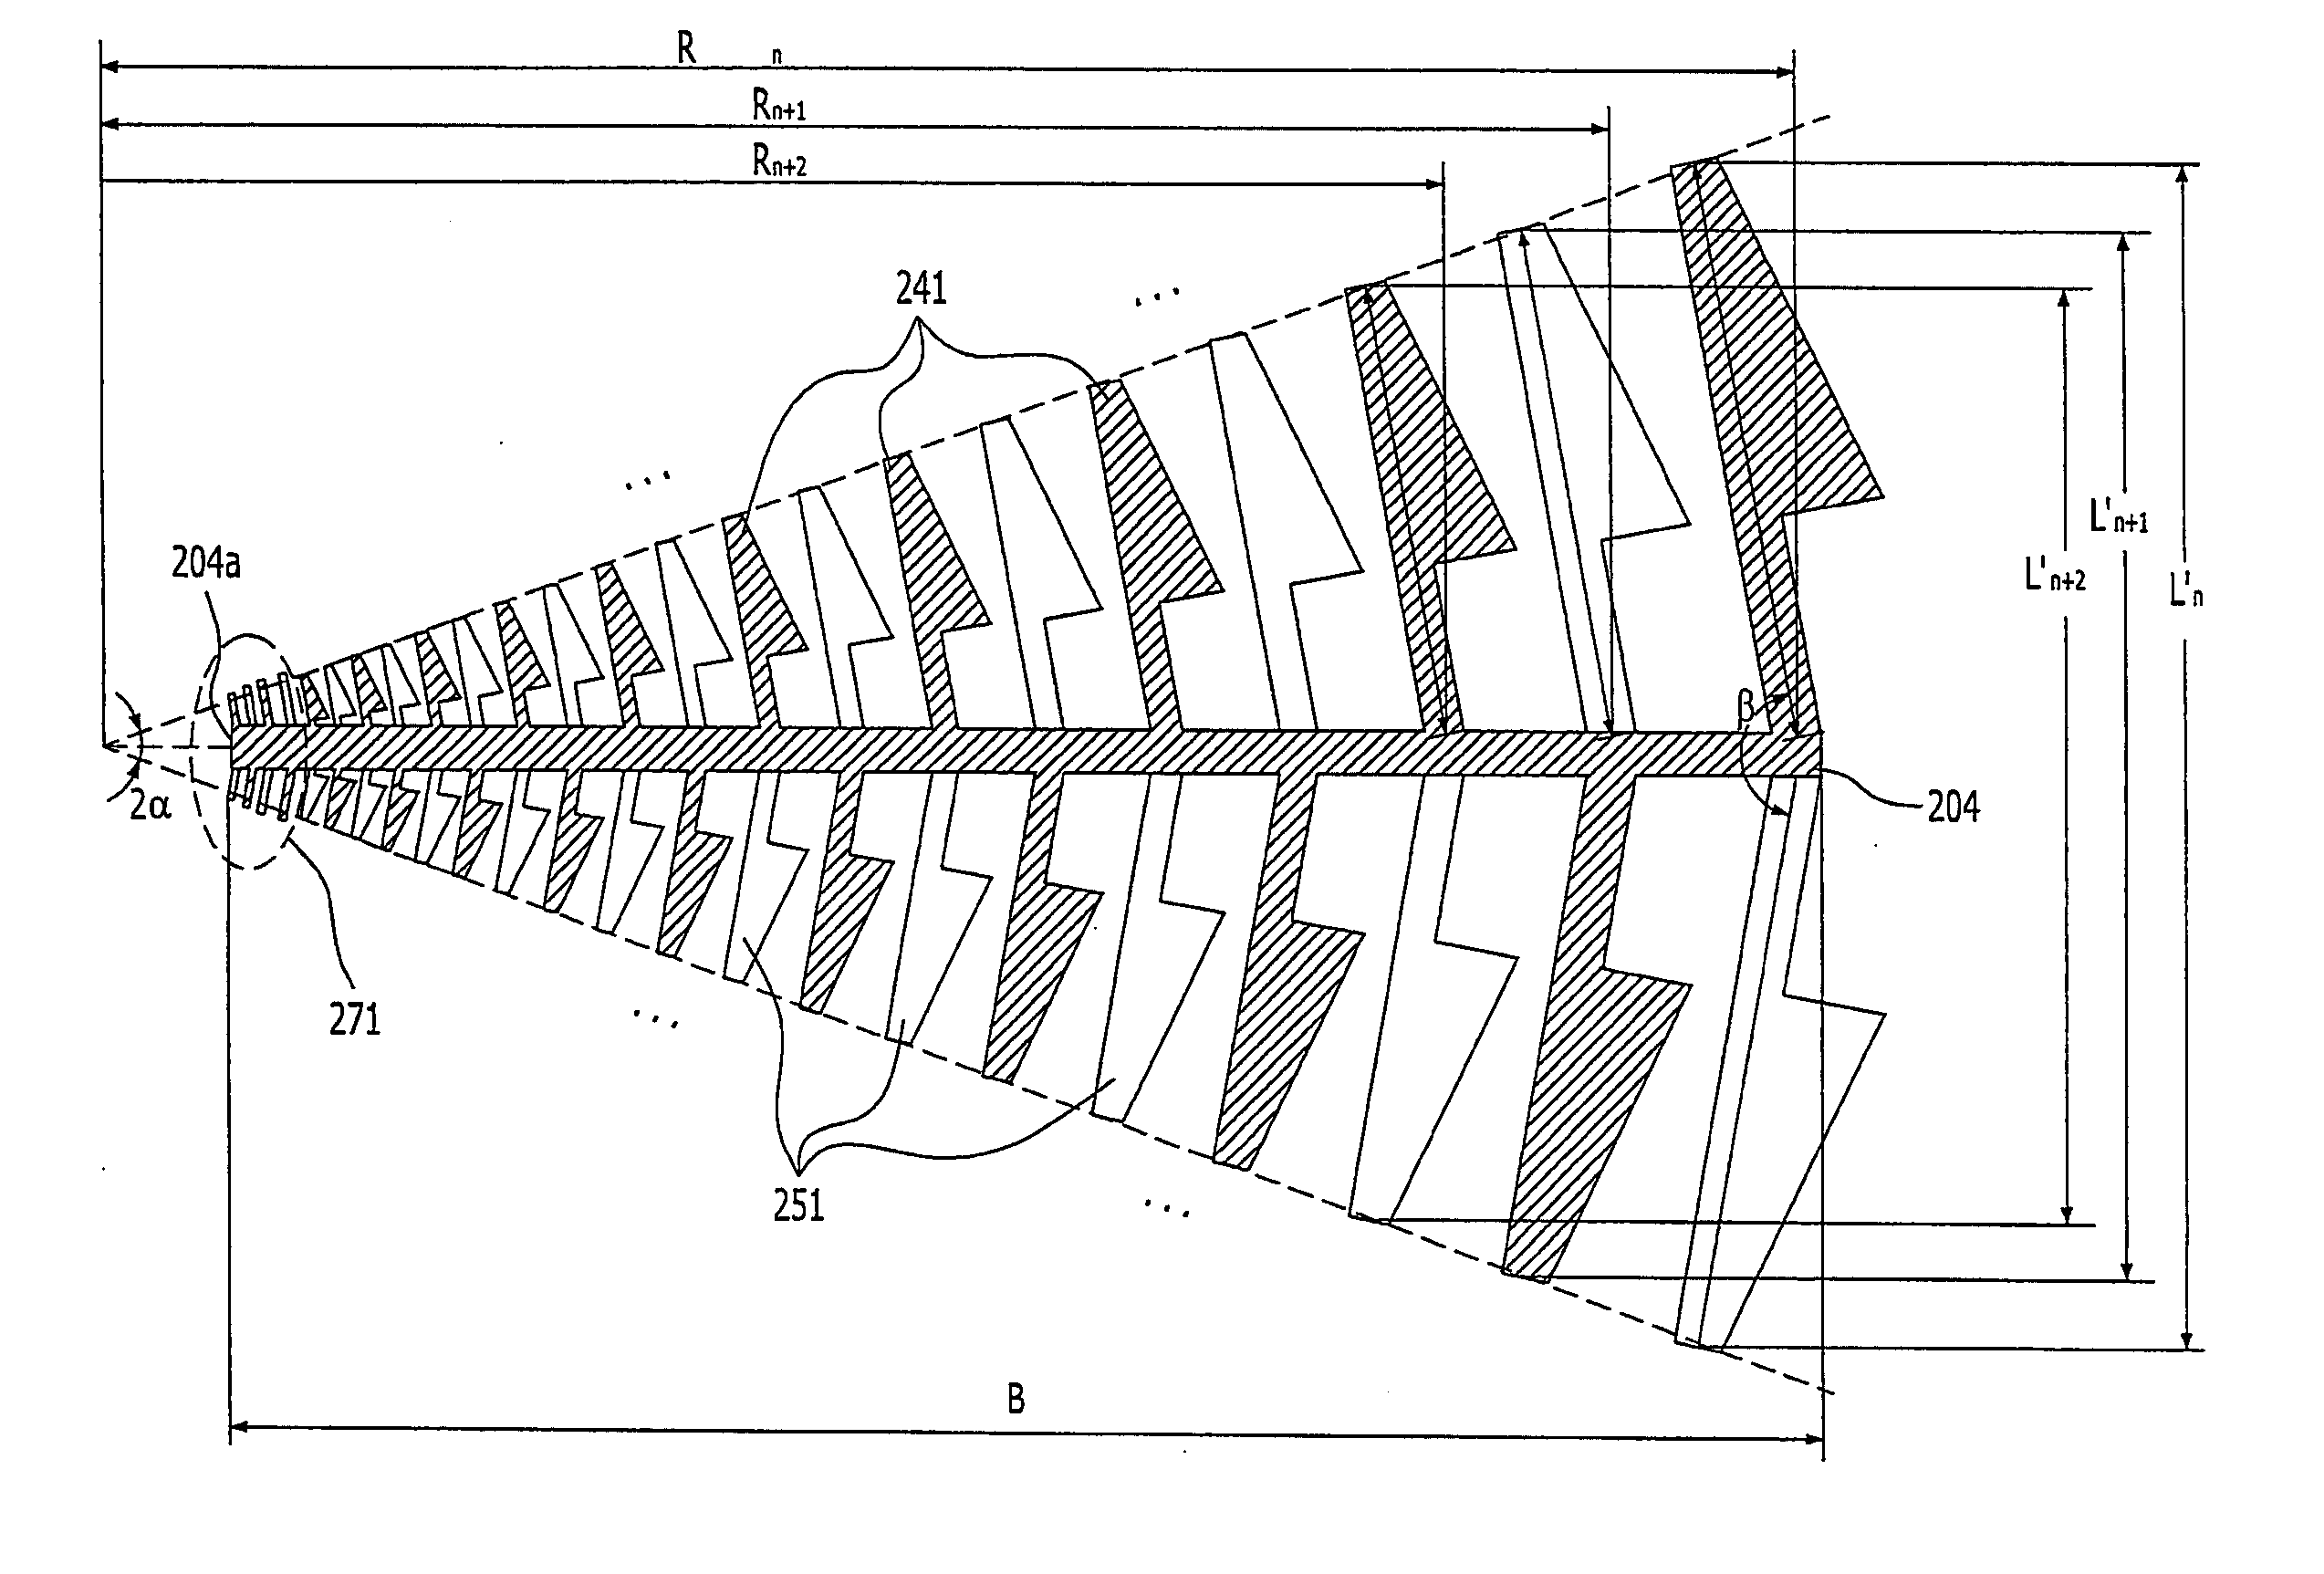 Log periodic antenna